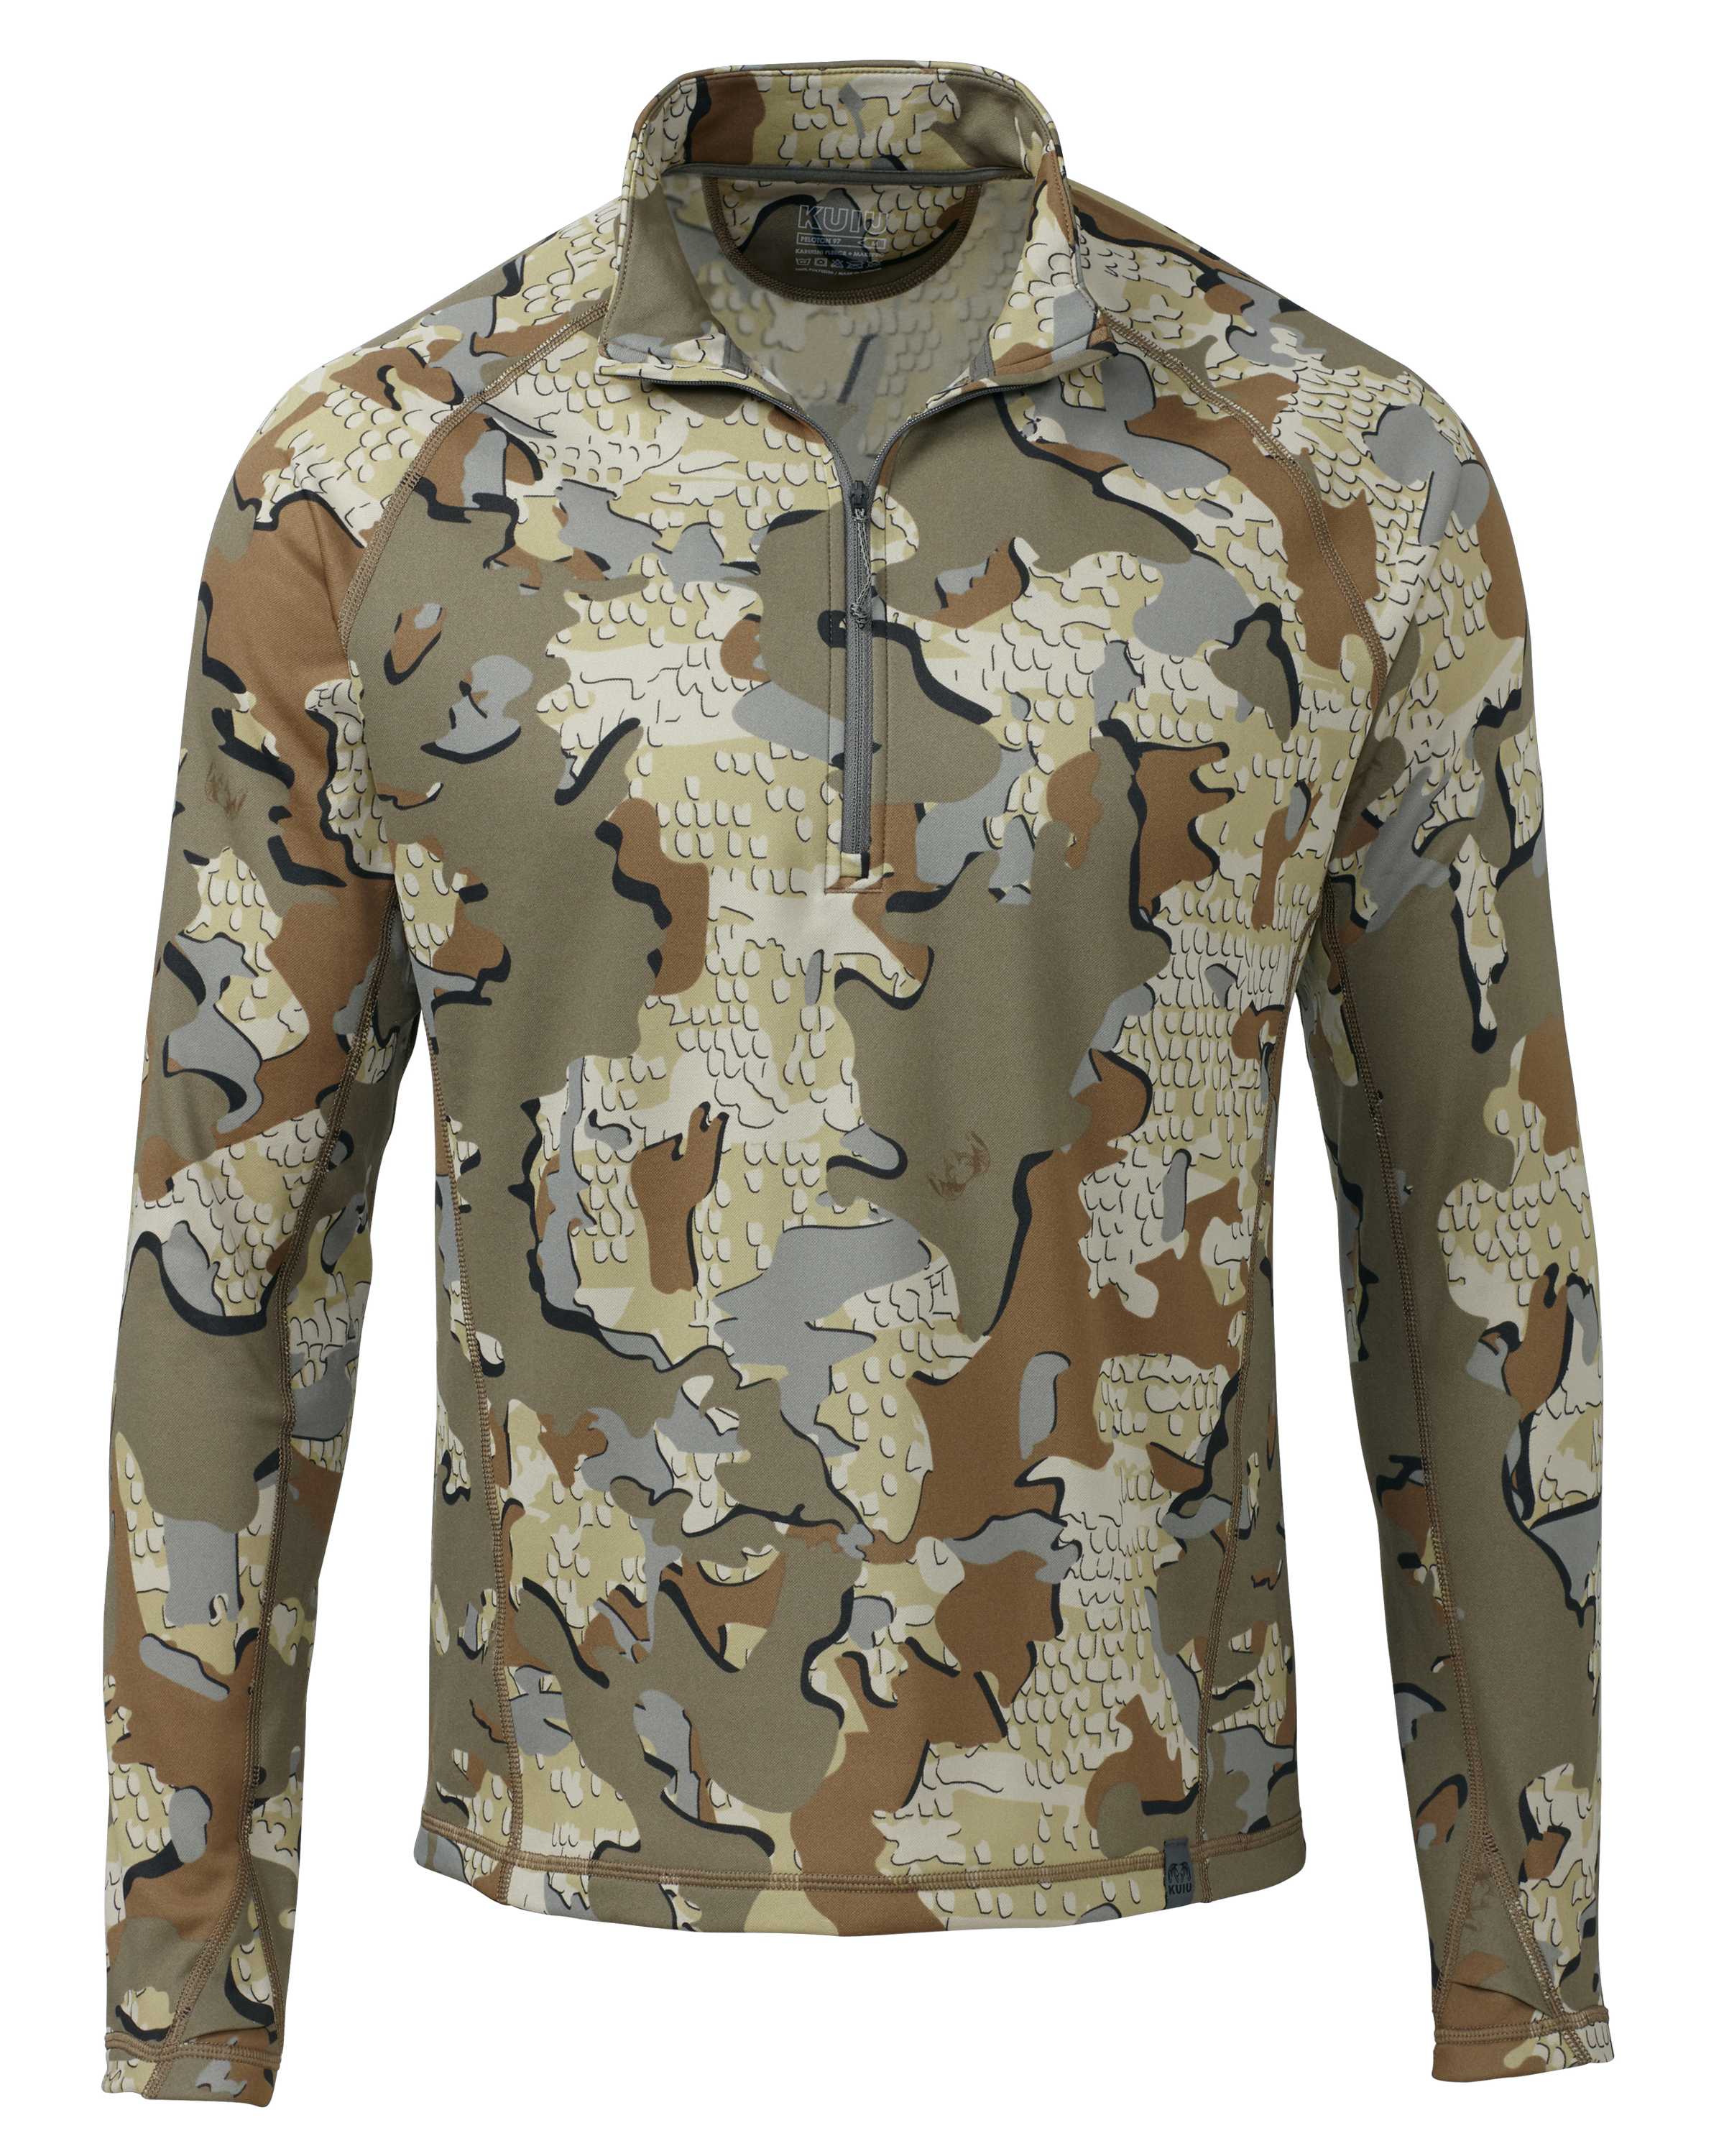 KUIU Peloton 97 Fleece Zip Hunting Shirt in Valo | Size Medium